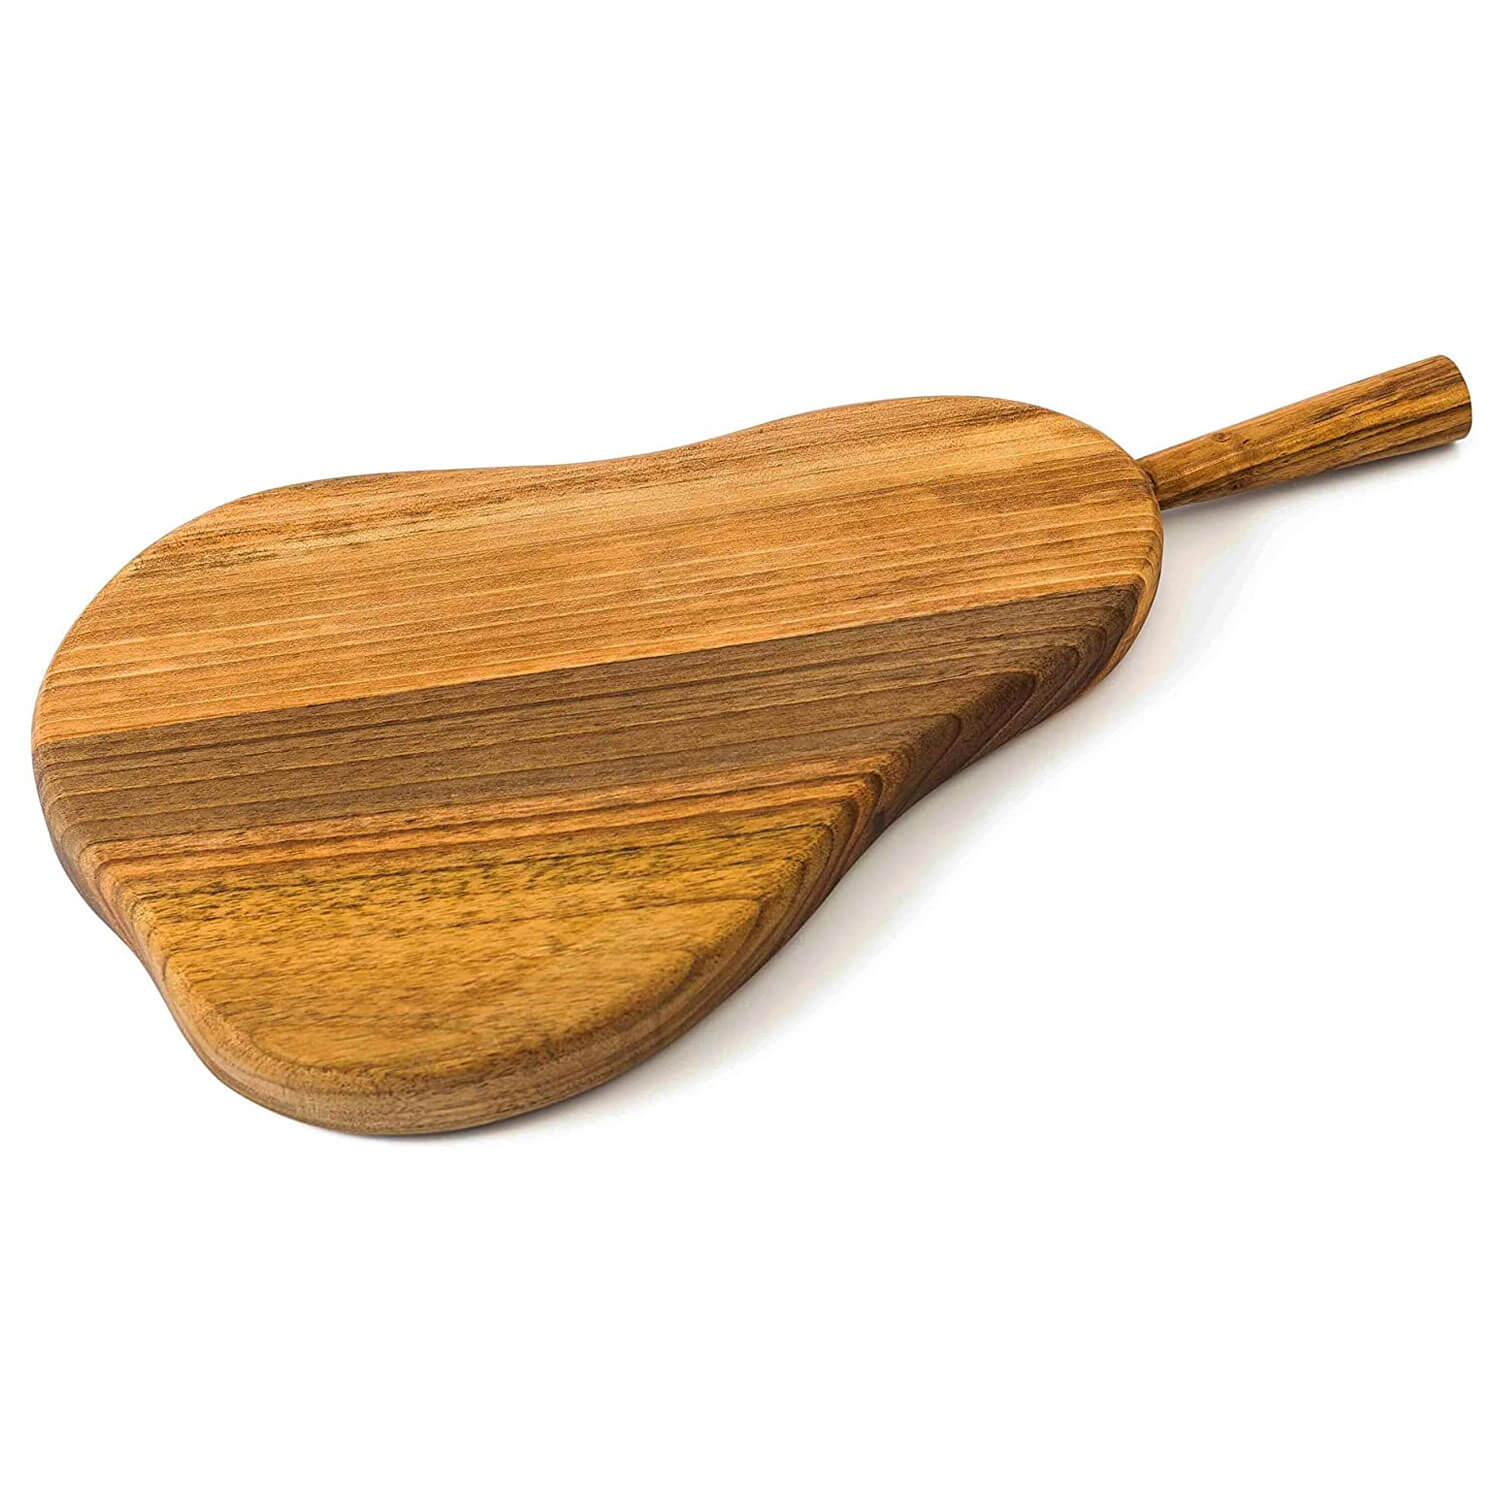 Walnut Pear-Shaped Wooden Cutting Board - Handcrafted Serving Board